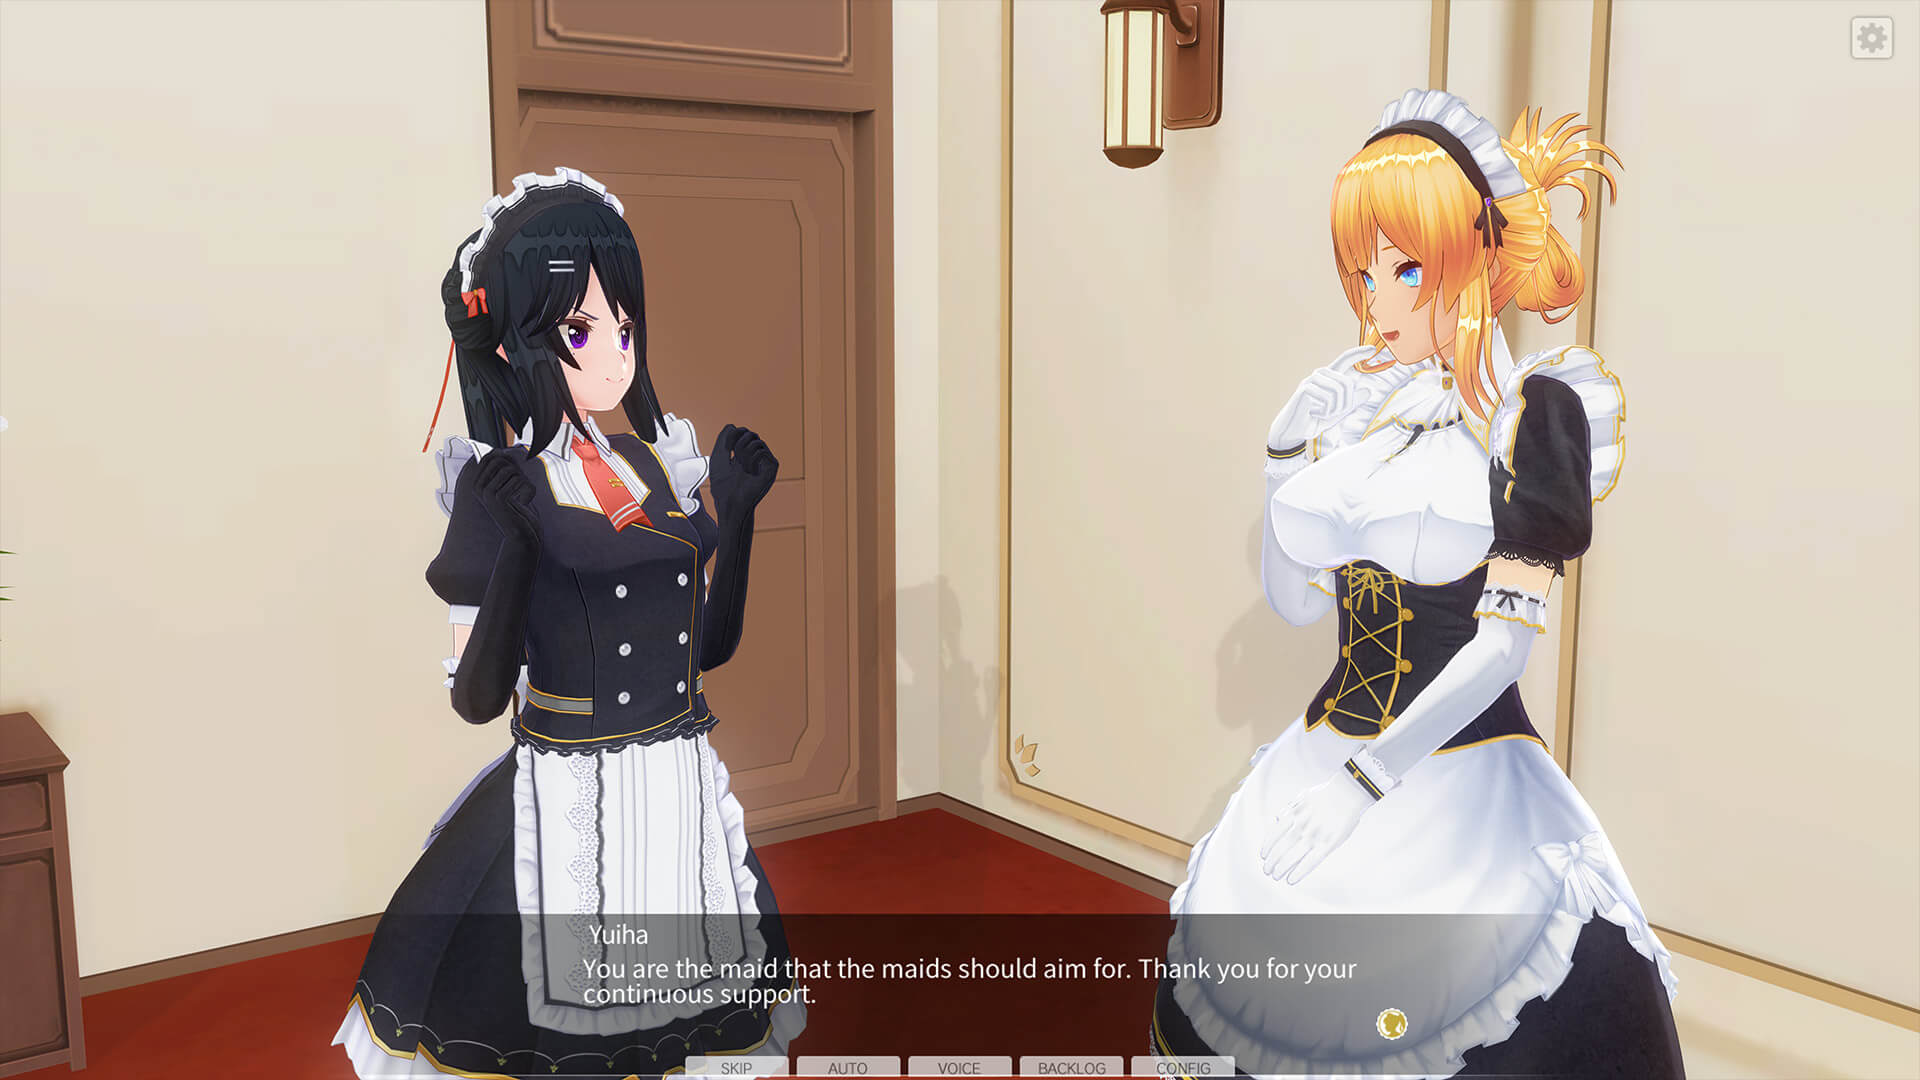 custom maid 3d 2 translate to english